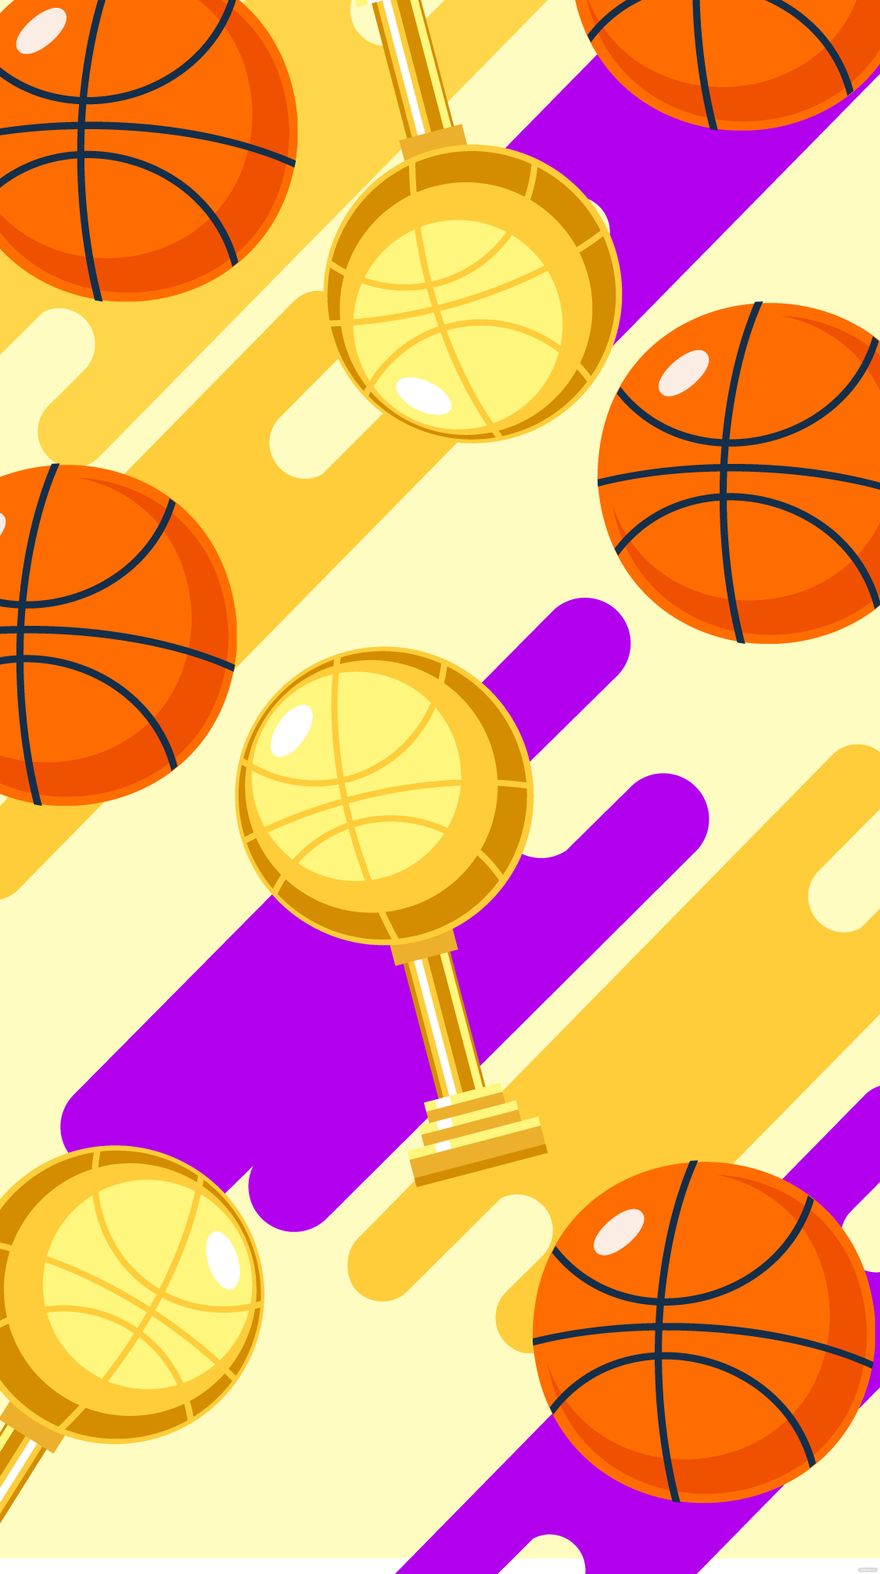 Free Basketball Iphone Background in Illustrator, EPS, SVG, JPG, PNG